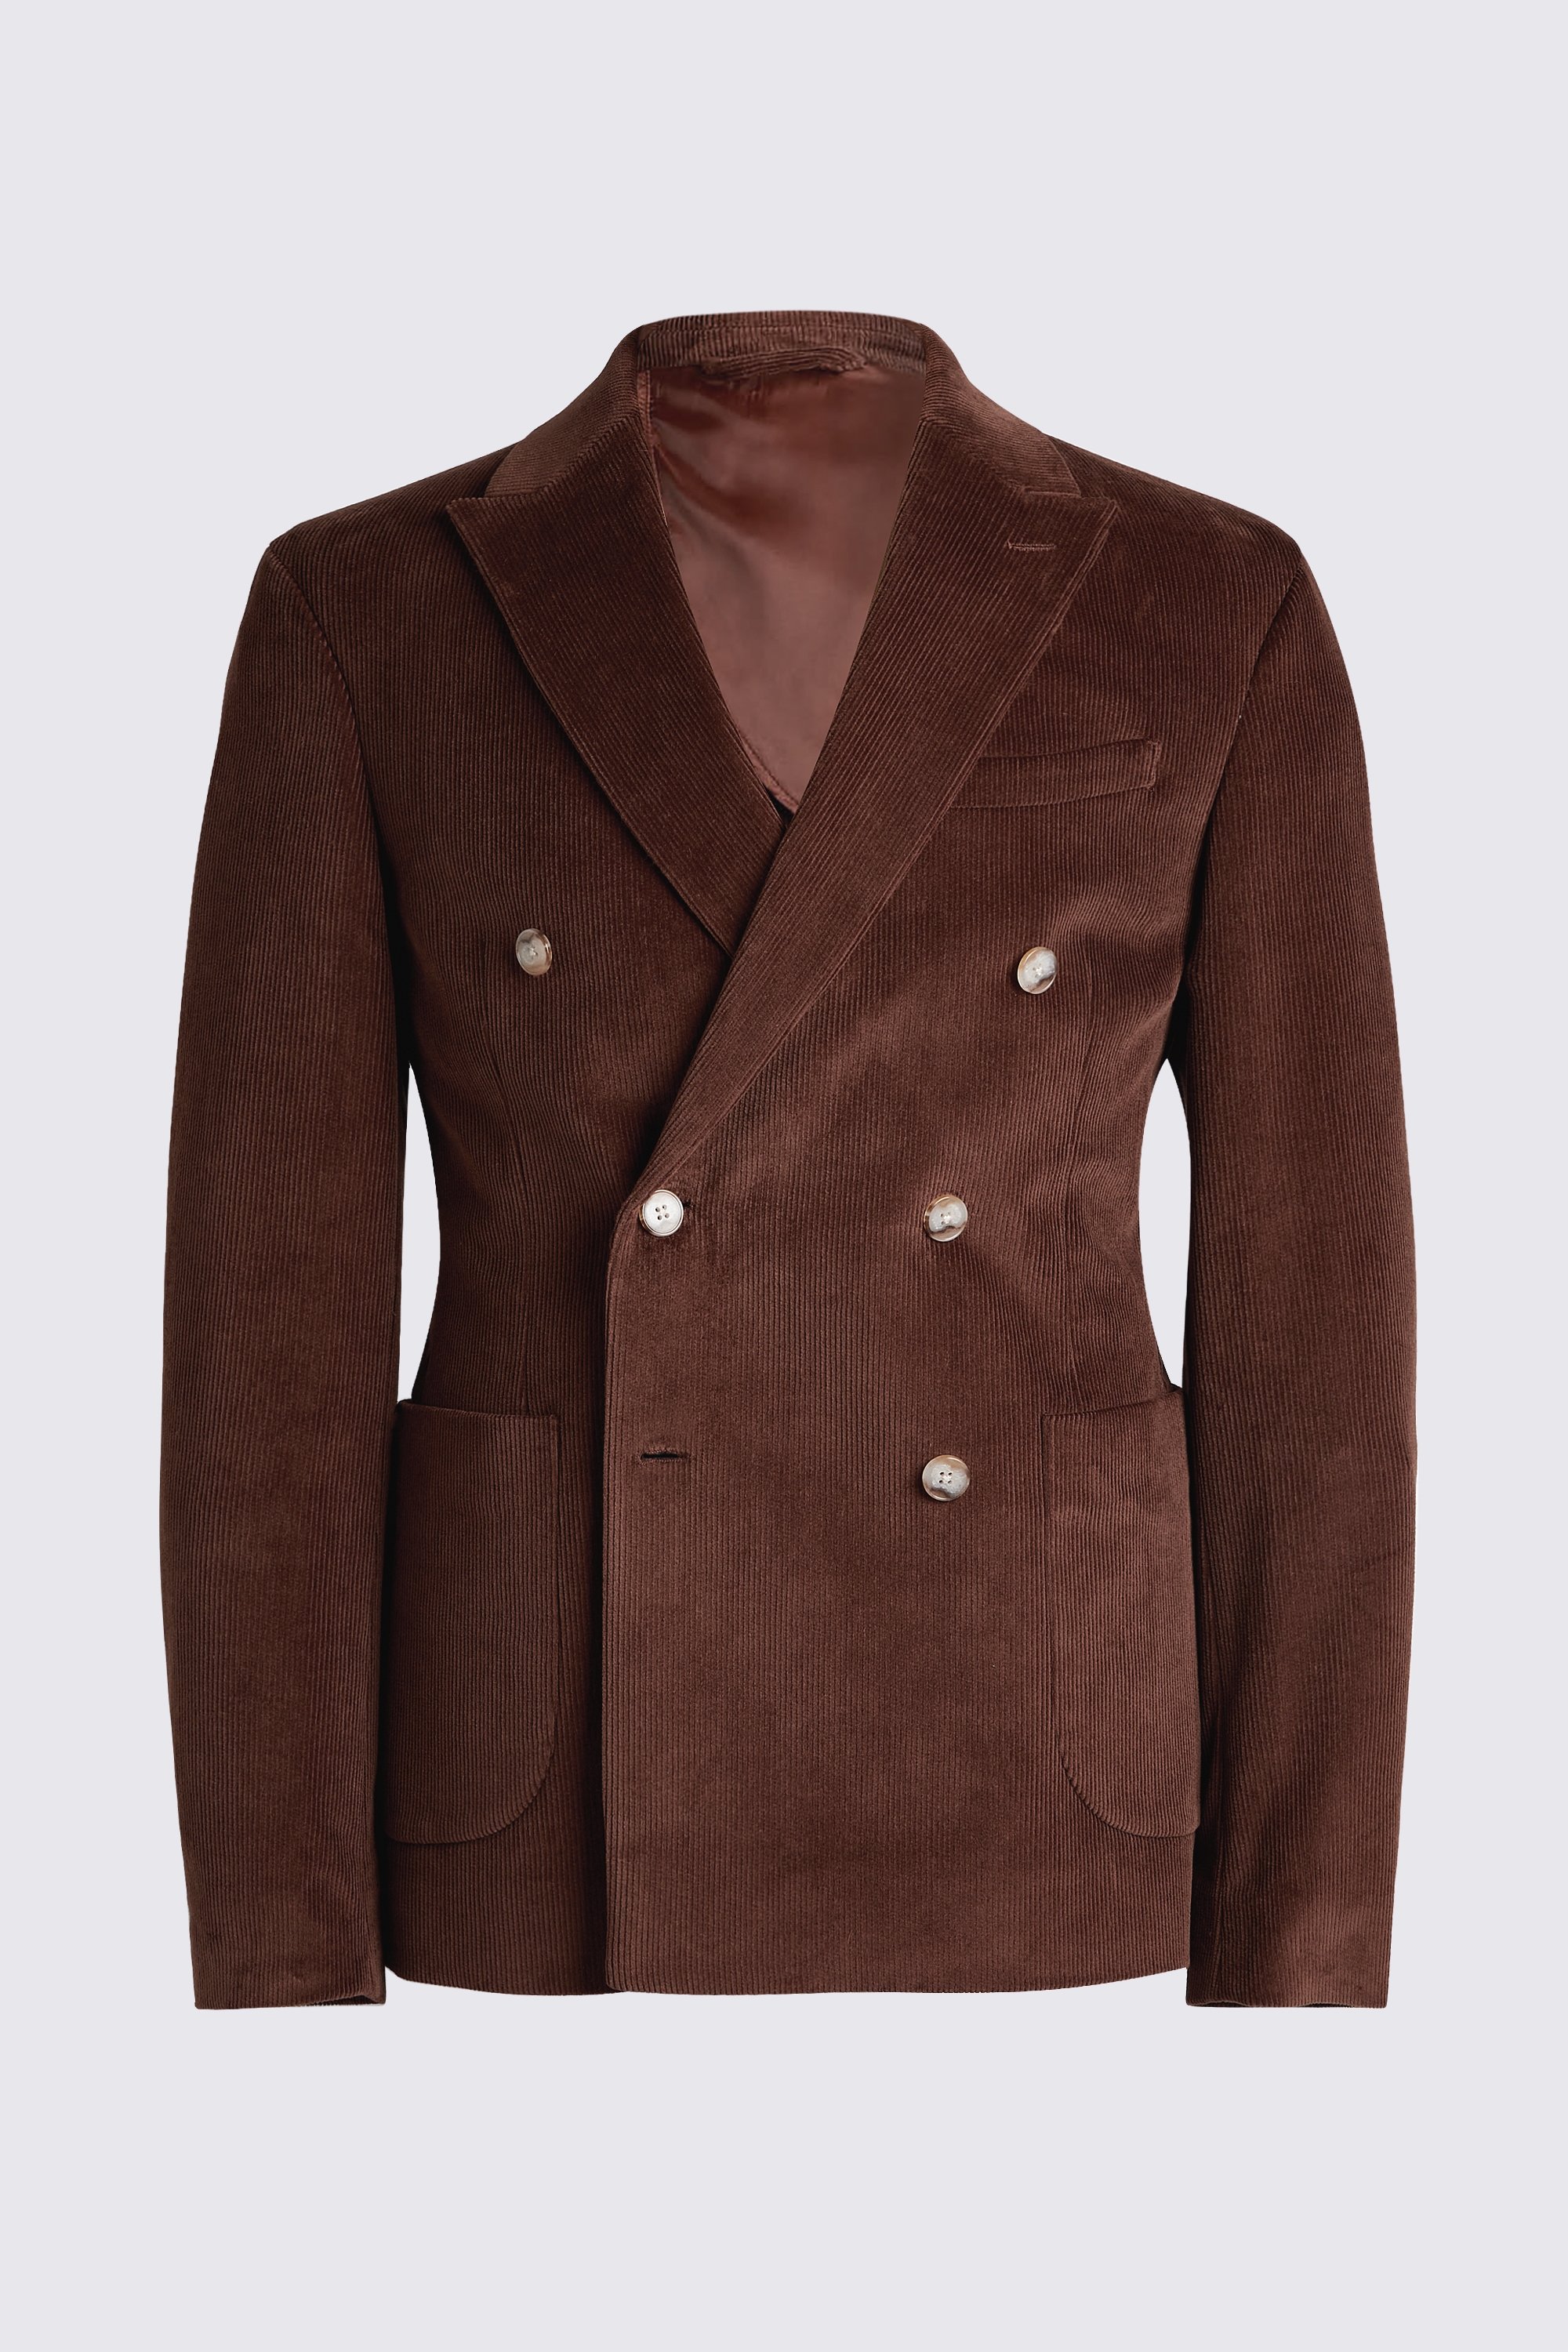 Slim Fit Copper Corduroy Jacket | Buy Online at Moss